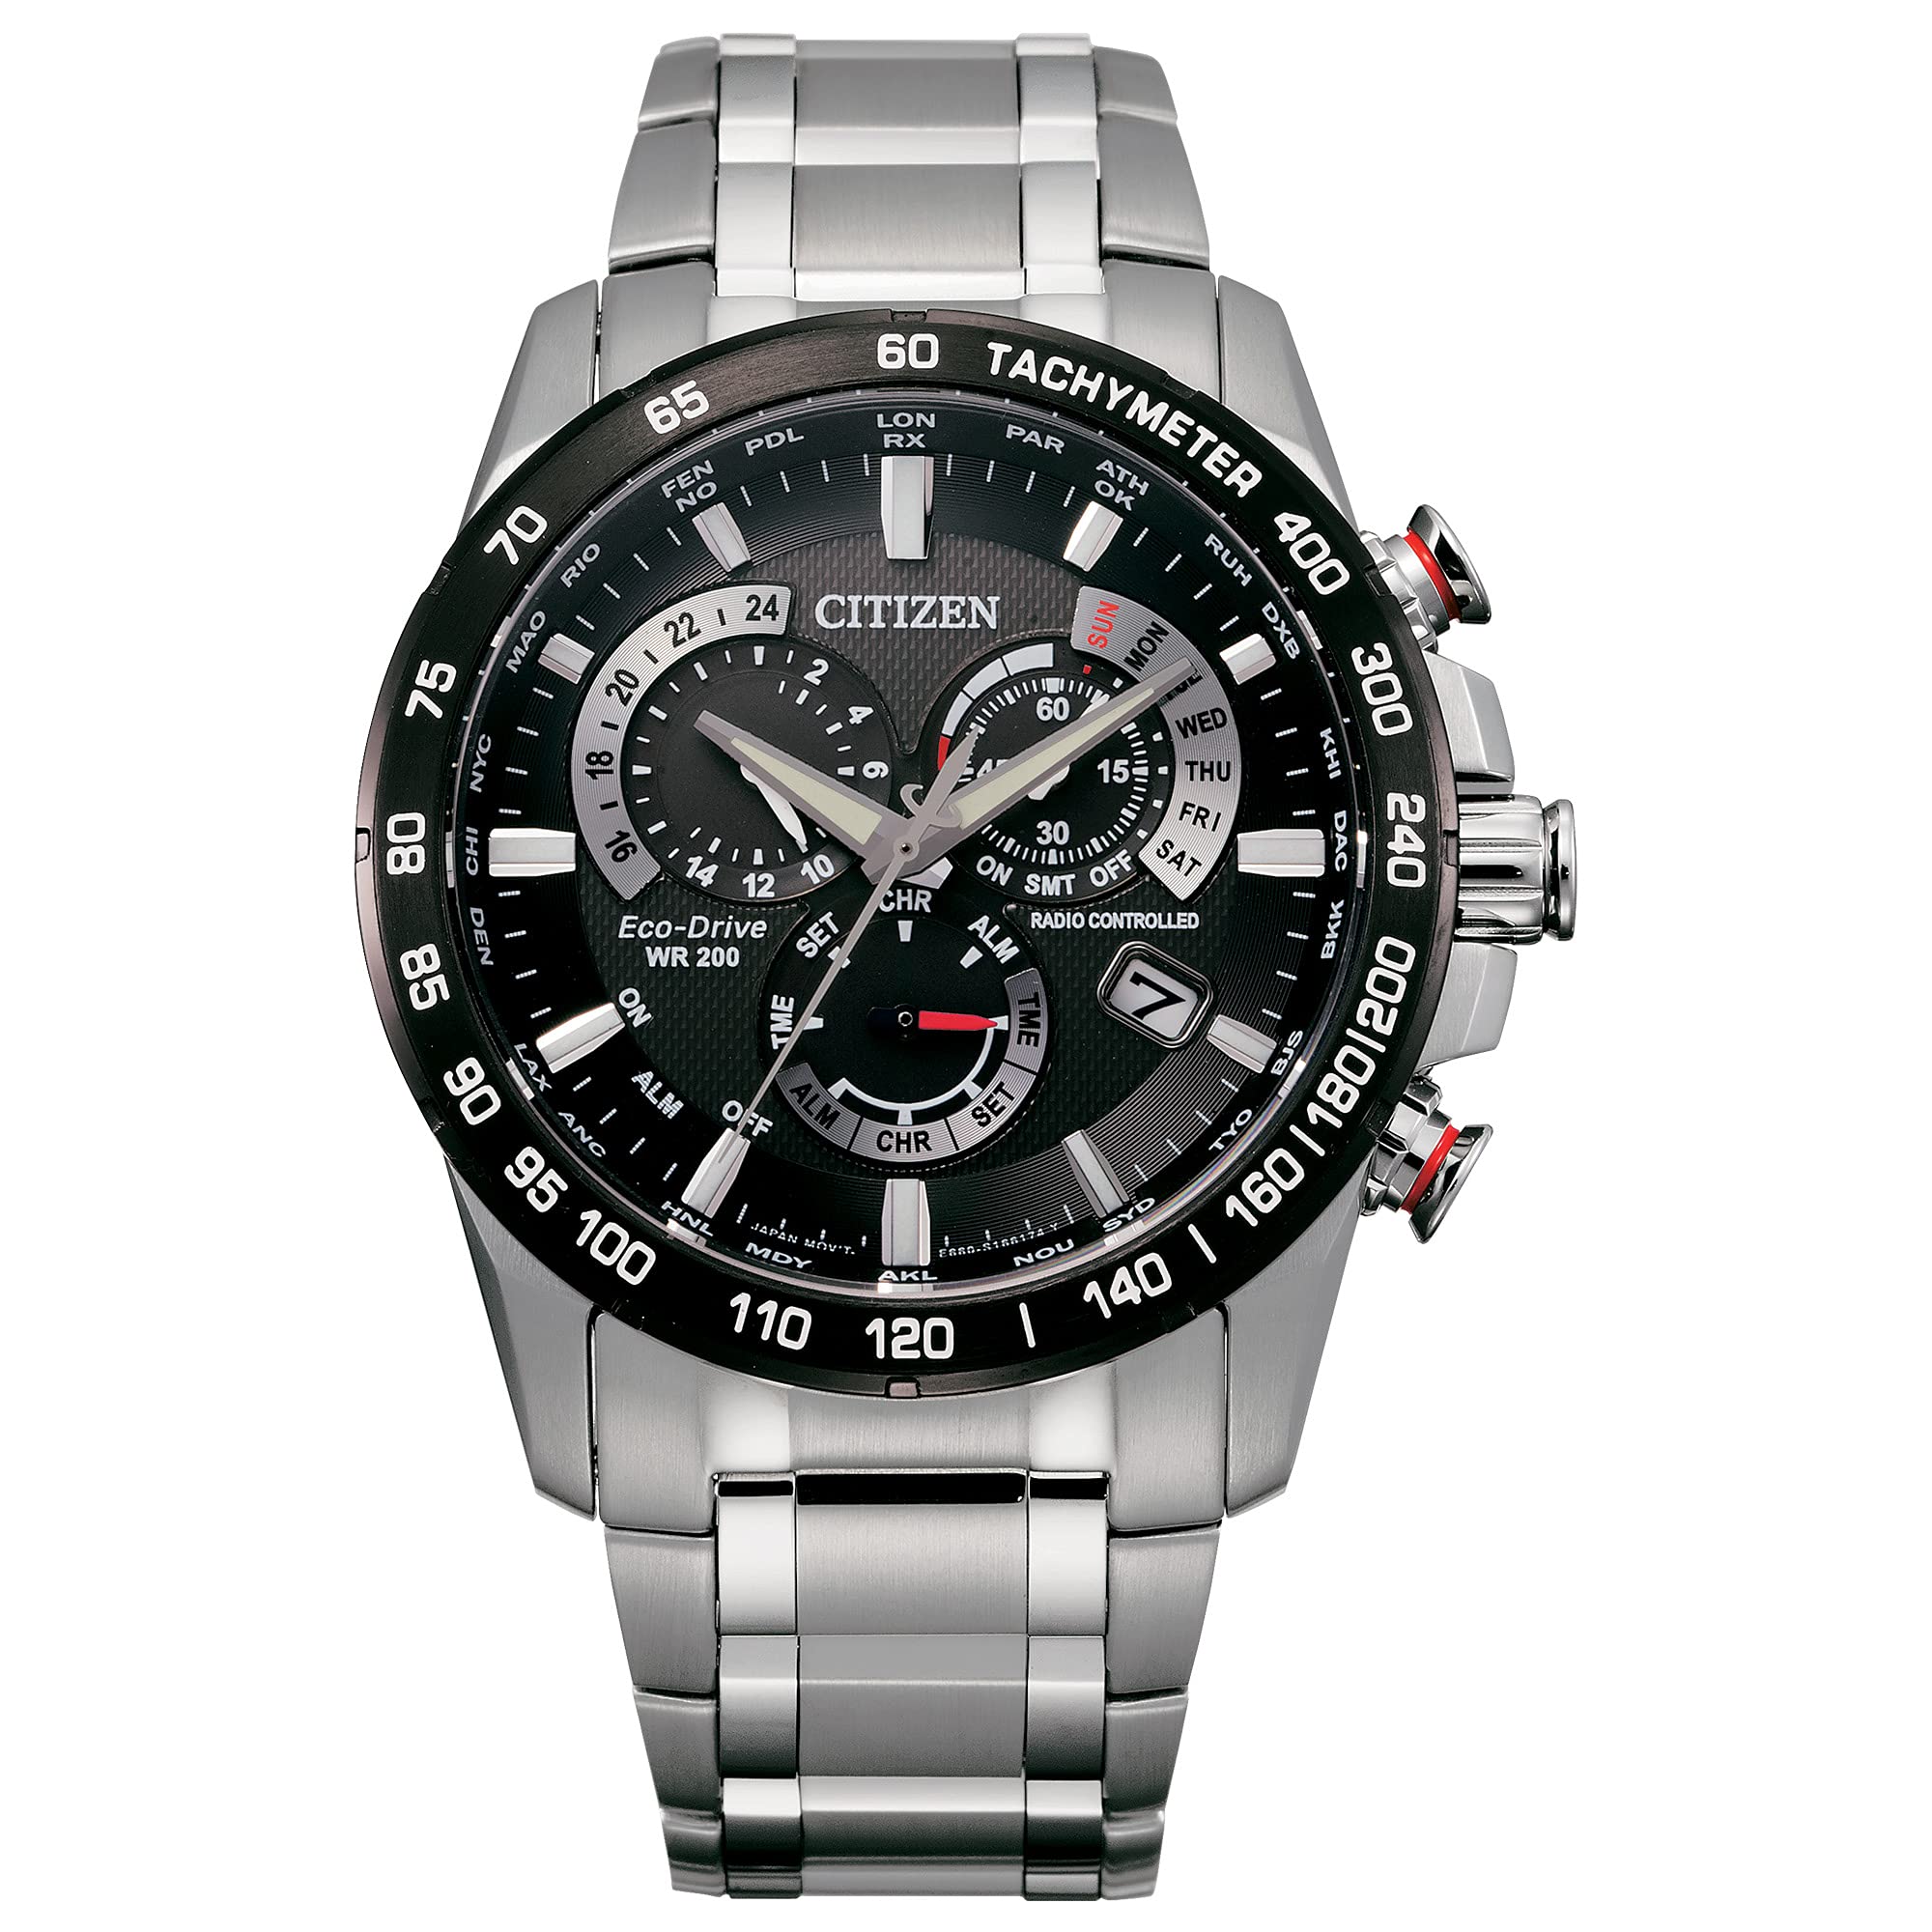 Citizen Men's Eco-Drive Sport Luxury PCAT Chronograph Watch Stainless Steel, Black Dial (Model: CB5898-59E) $357.34